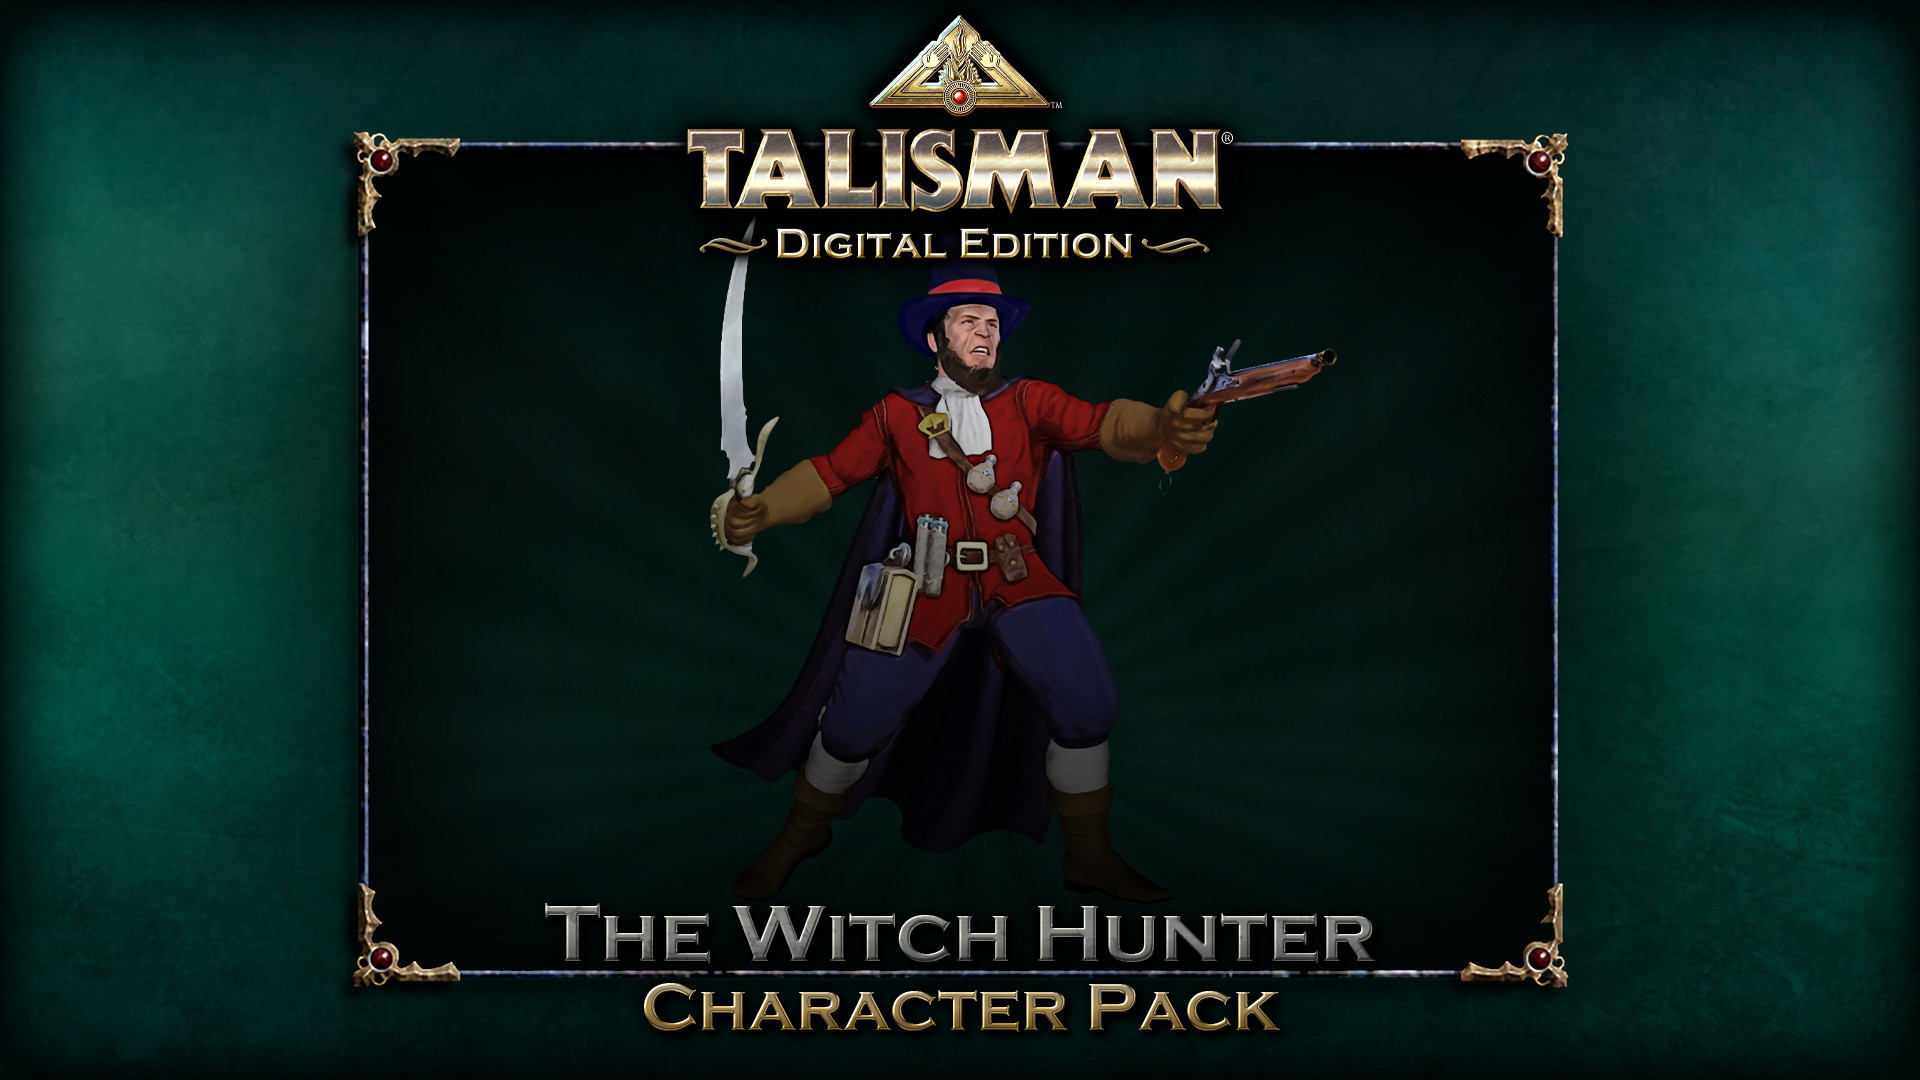 Talisman - Character Pack #21 Witch Hunter DLC Steam CD Key